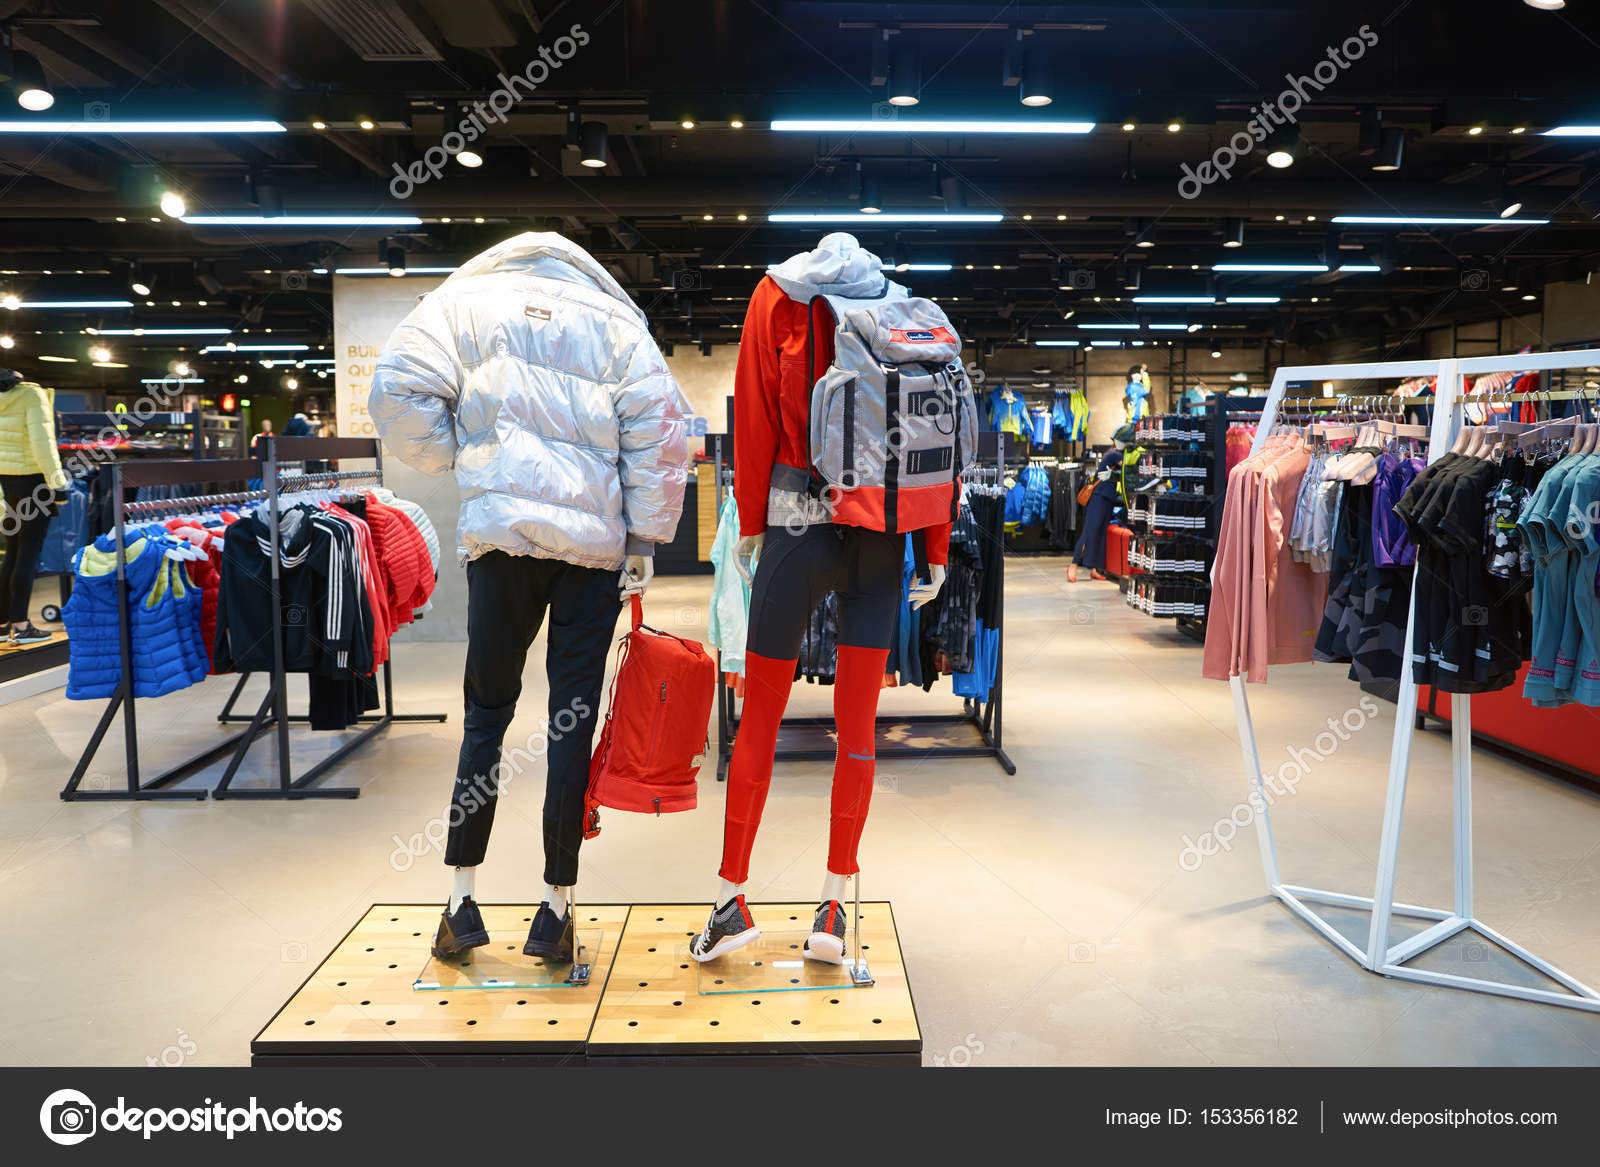 Museo Mercado impactante Tienda Adidas en Hong Kong — Foto editorial de stock © teamtime #153356182